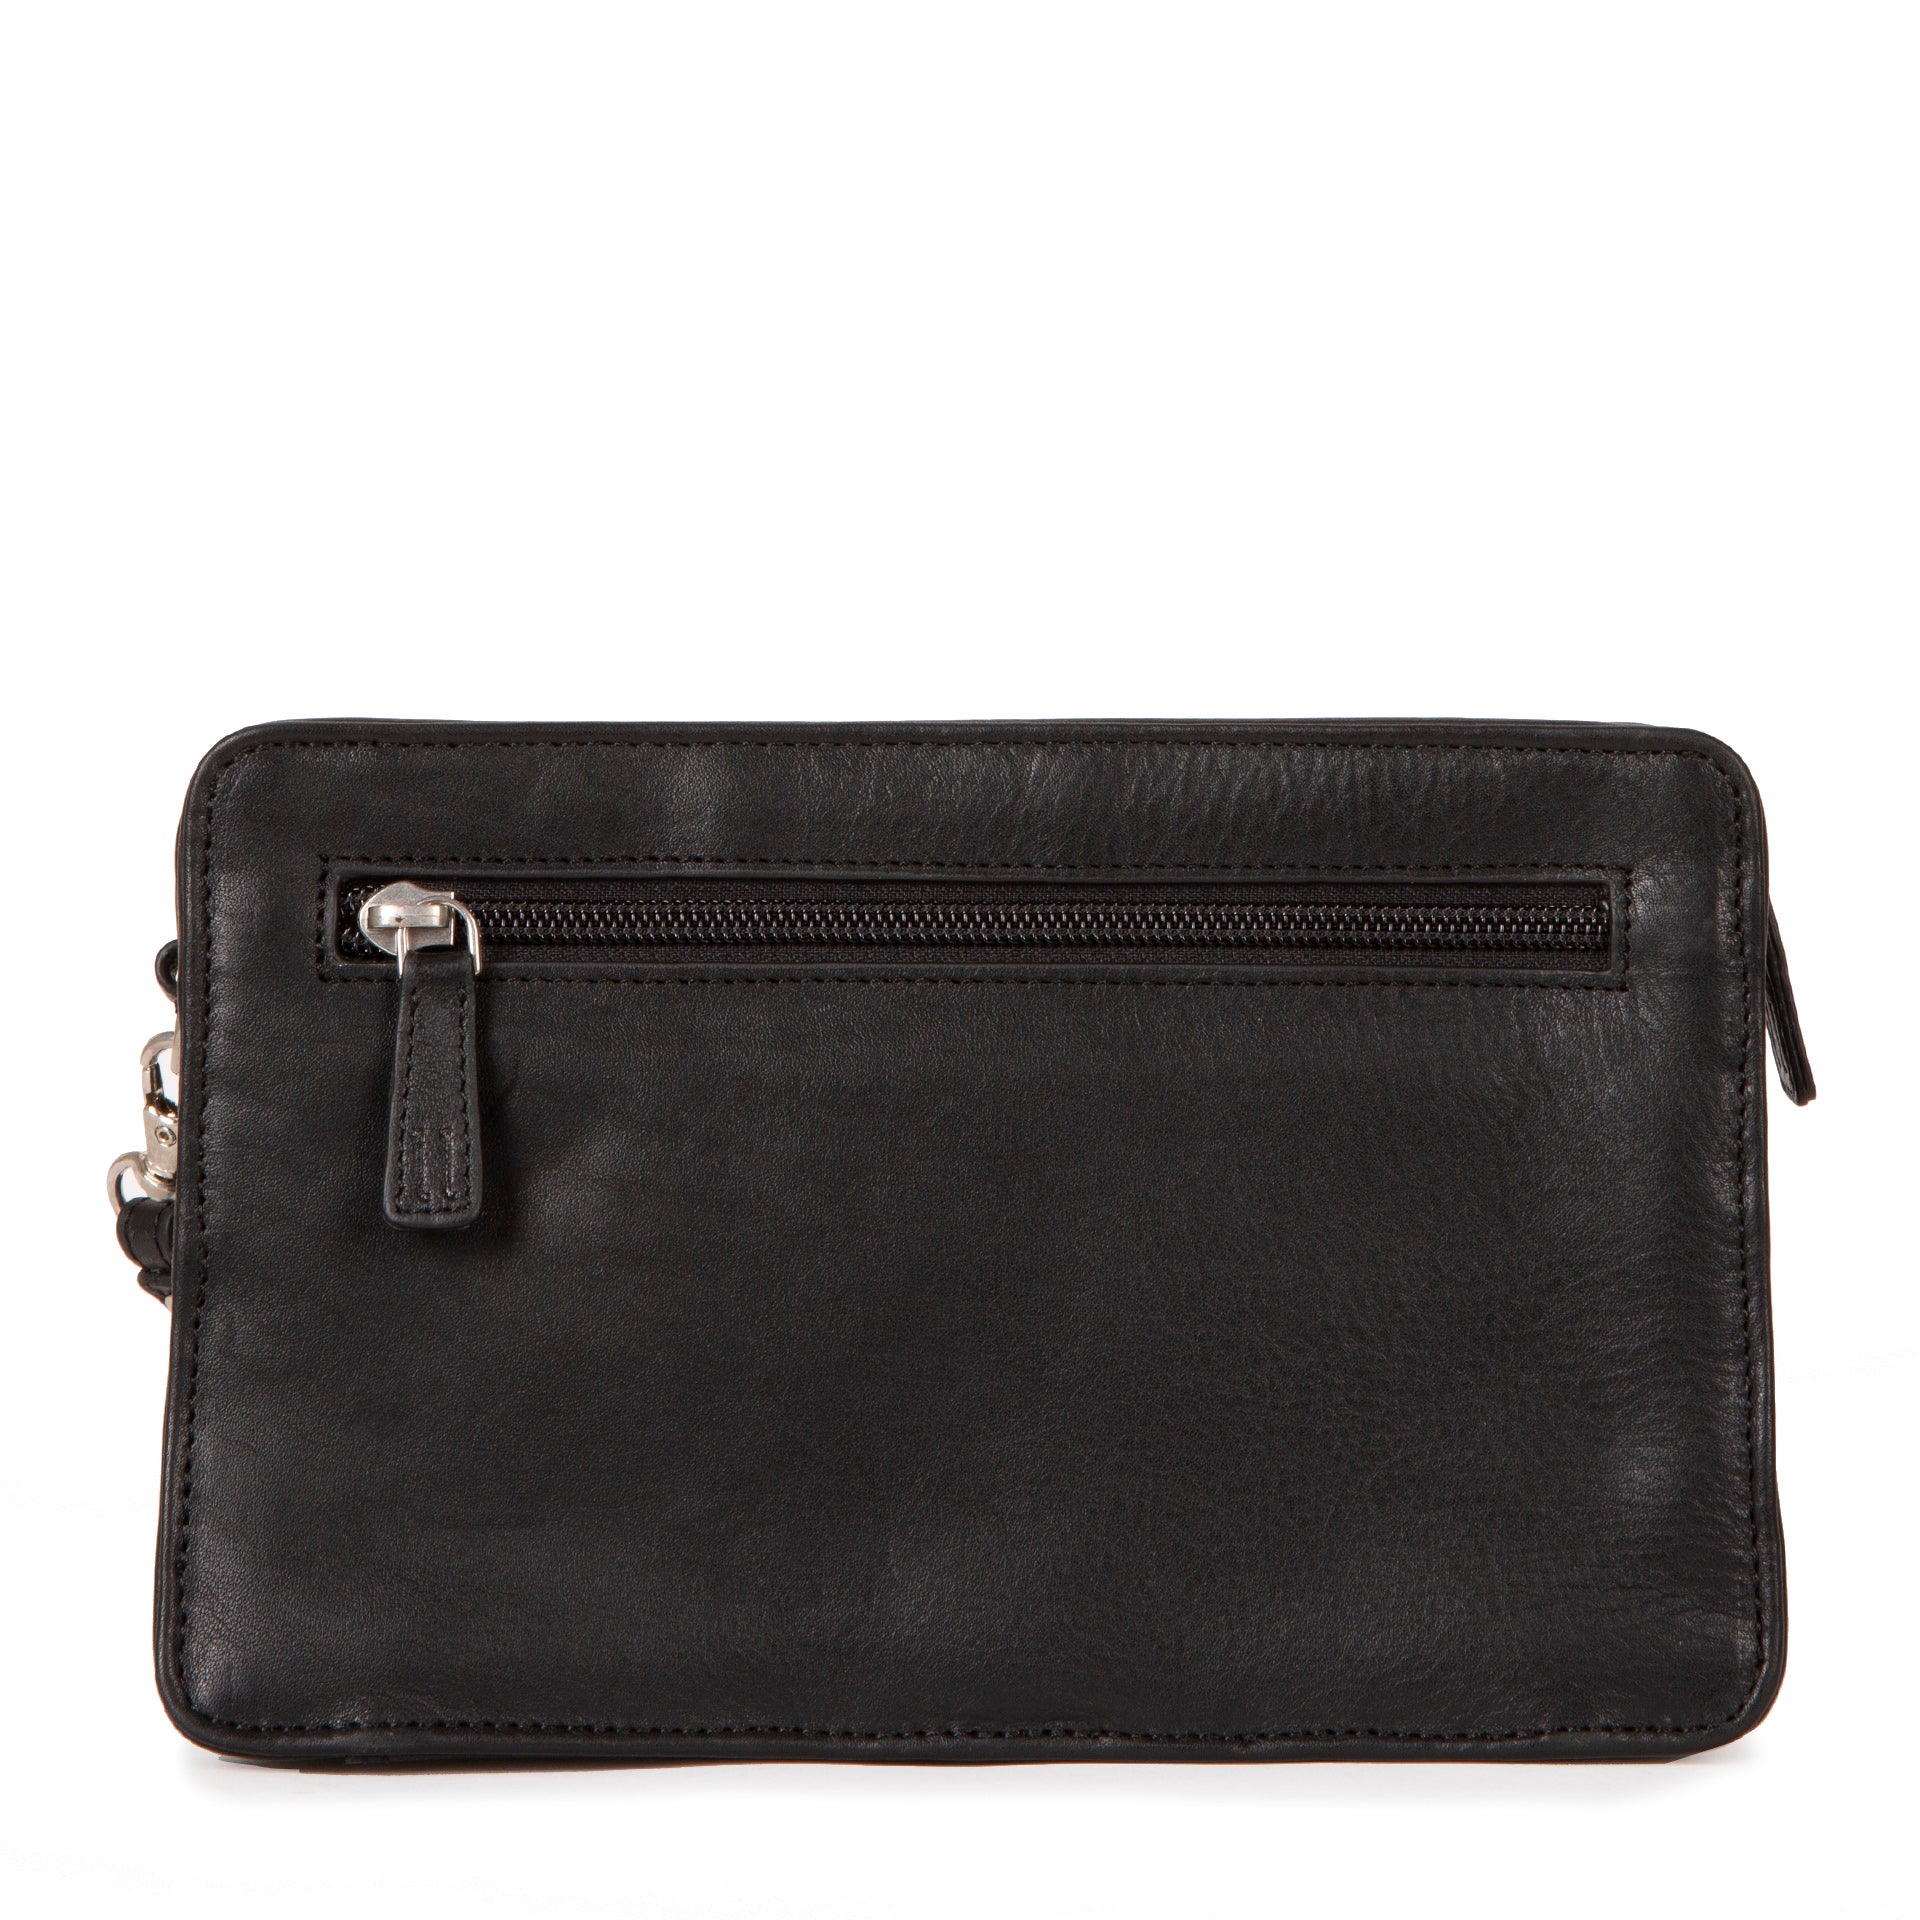 Falor Leather Double Compartment Purse | Stylish vests, Purple suede,  Leather hobo handbags